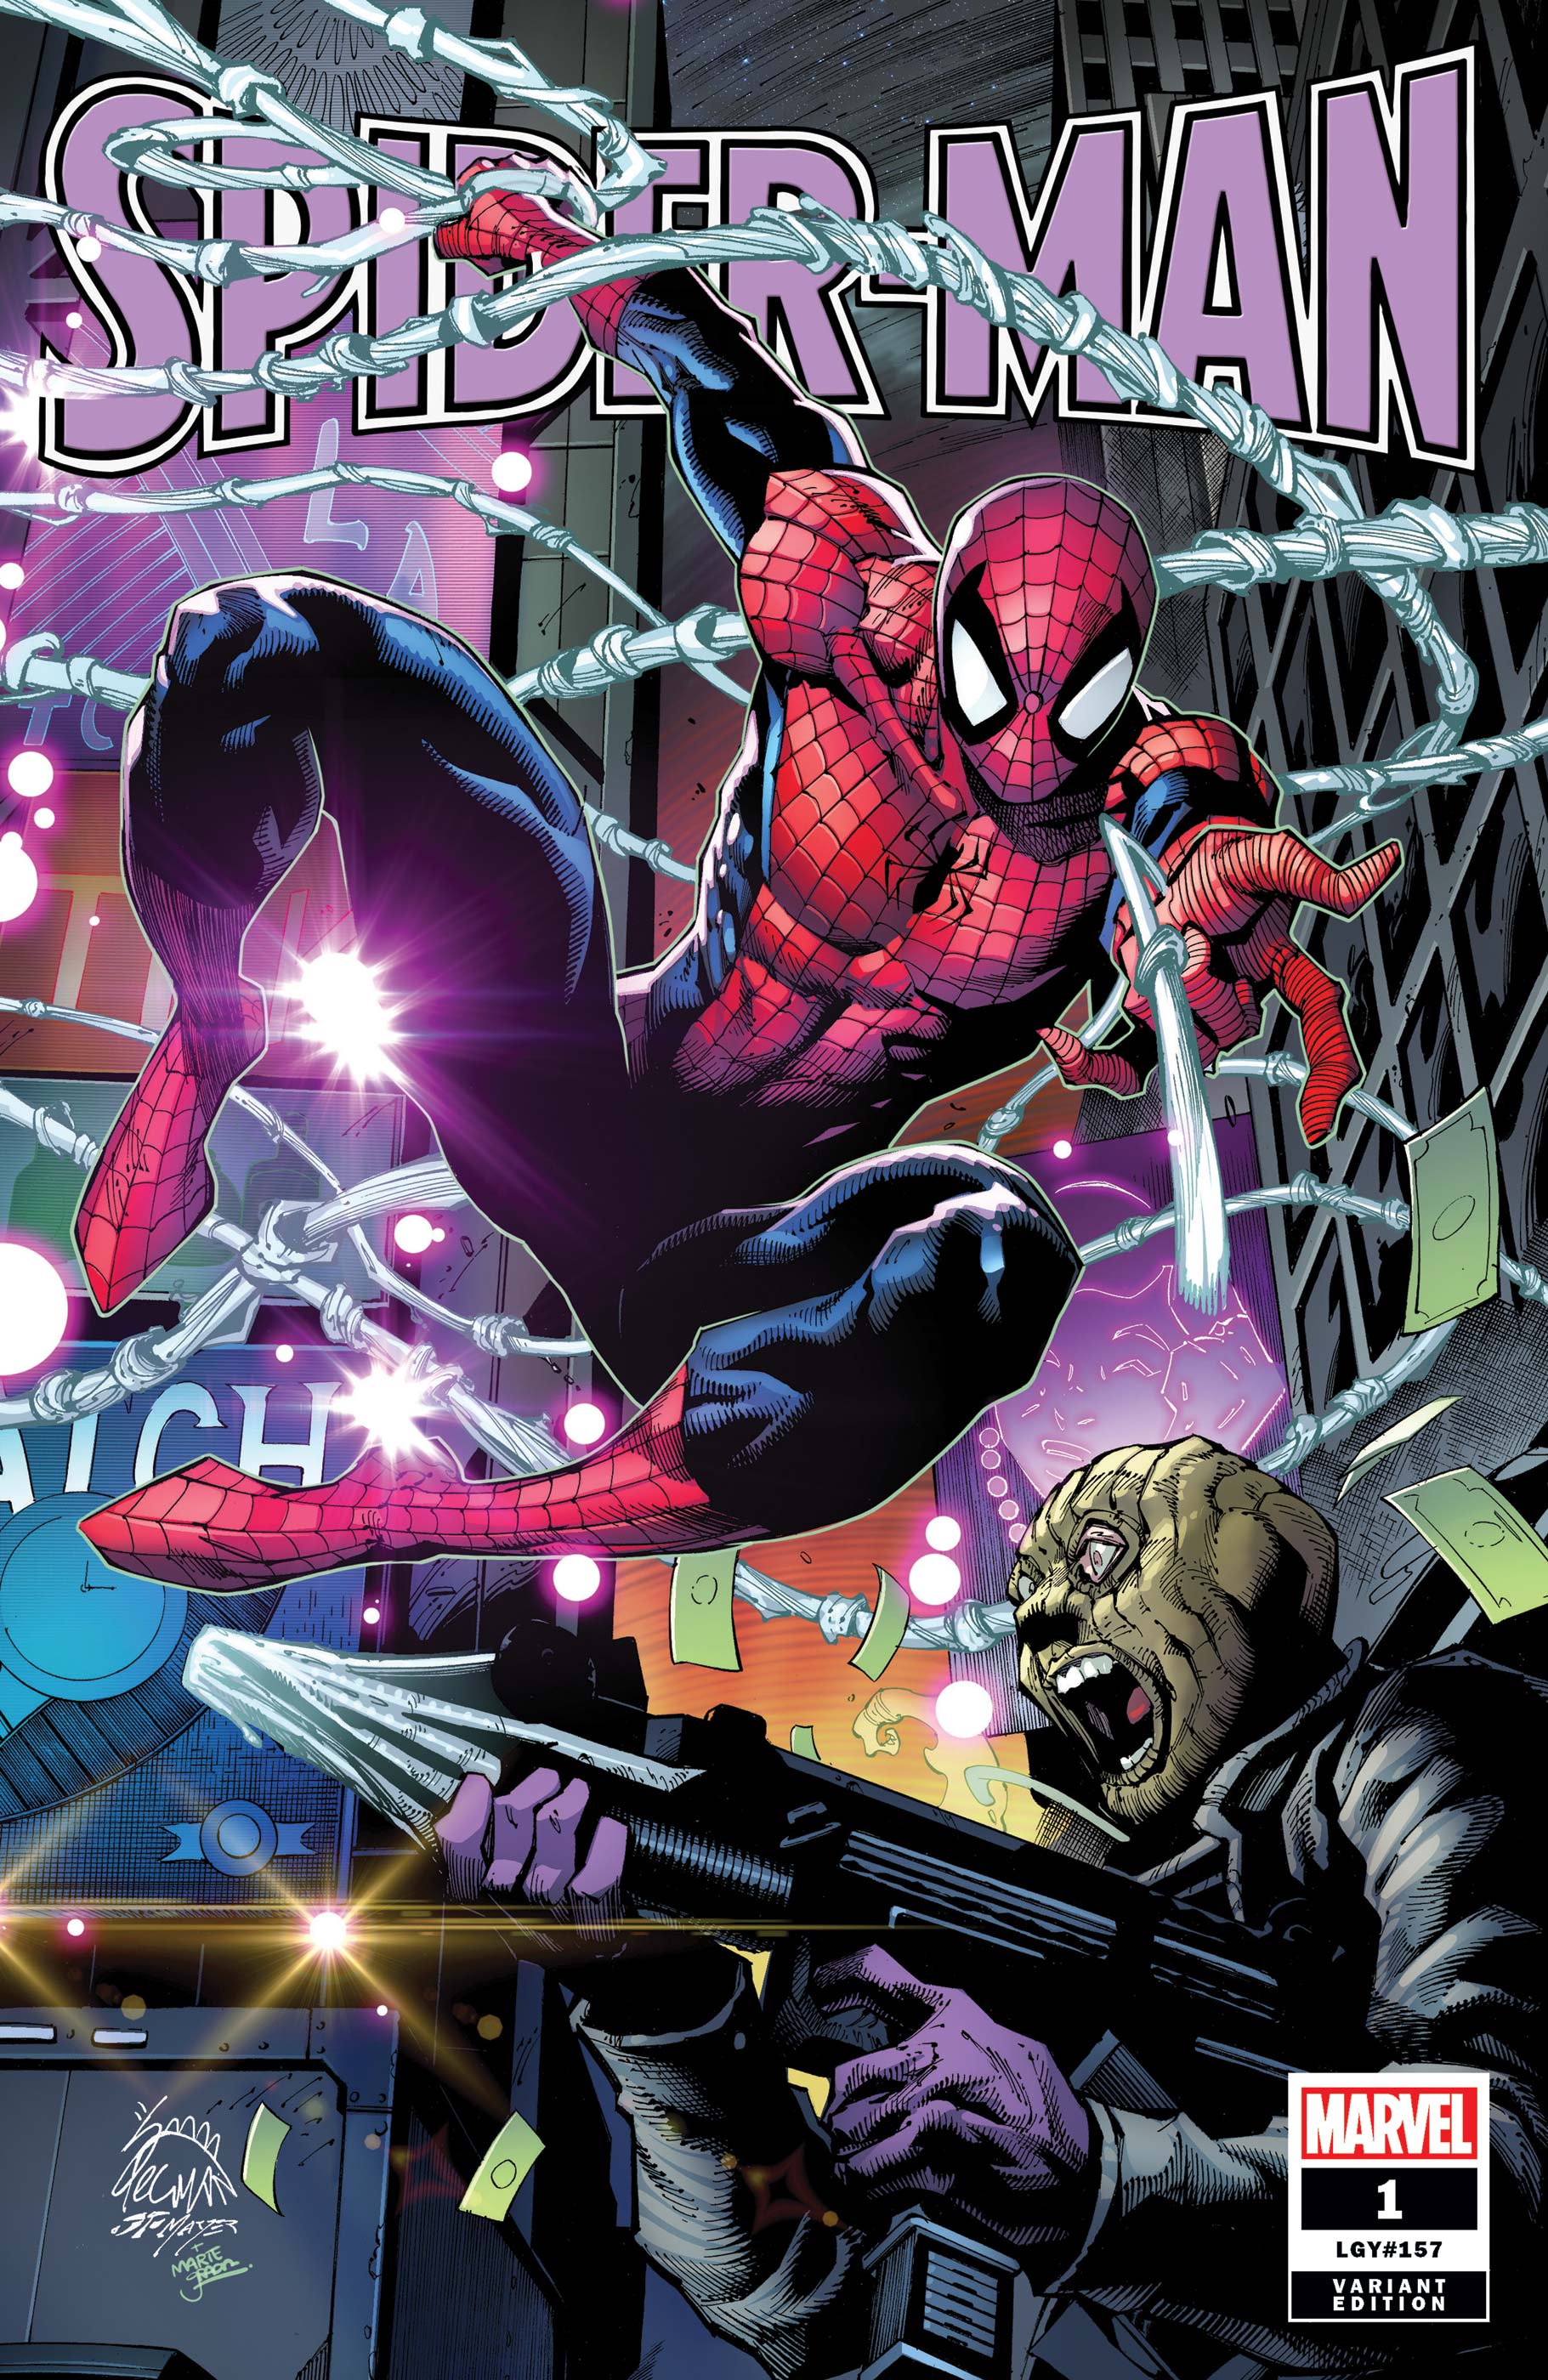 Spider-Man (2022) #1 (Variant)